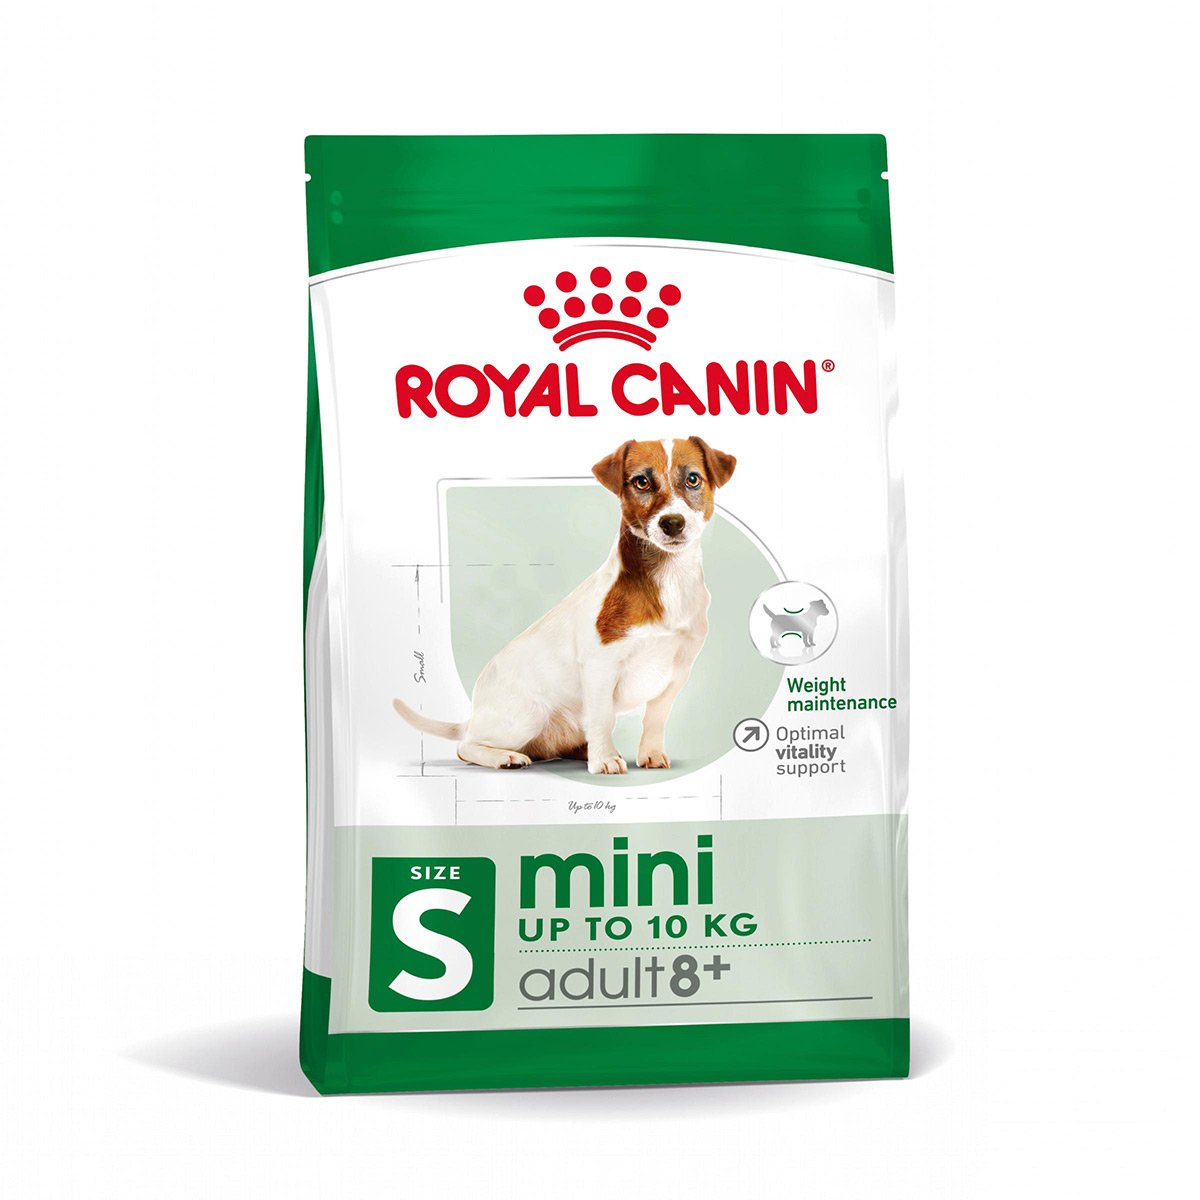 ROYAL CANIN MINI Adult 8+ Trockenfutter für ältere kleine Hunde 8kg von Royal Canin